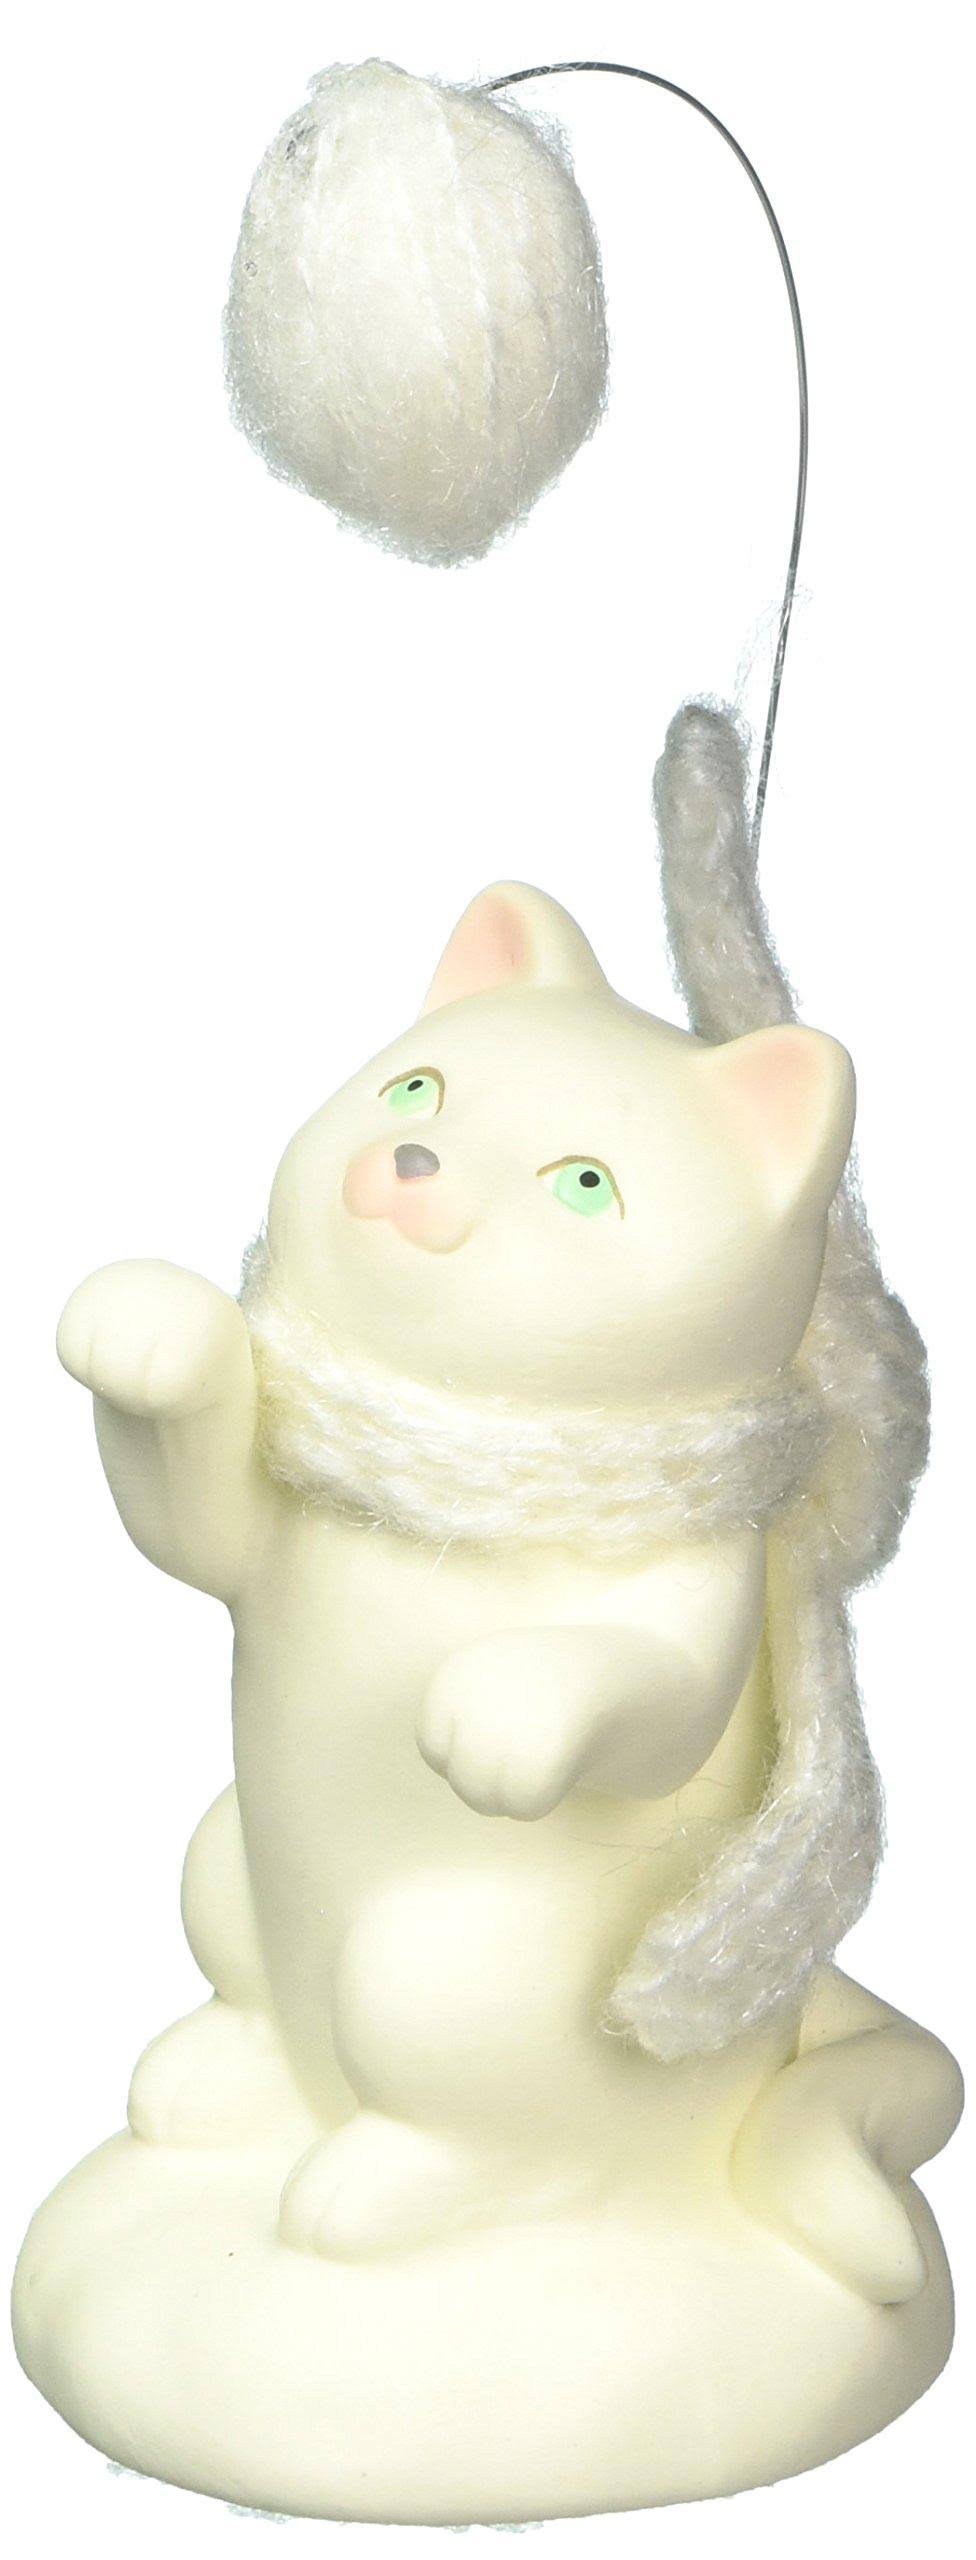 Department 56 Snowbabies Collectible Cat Animal Figurine, 4.25